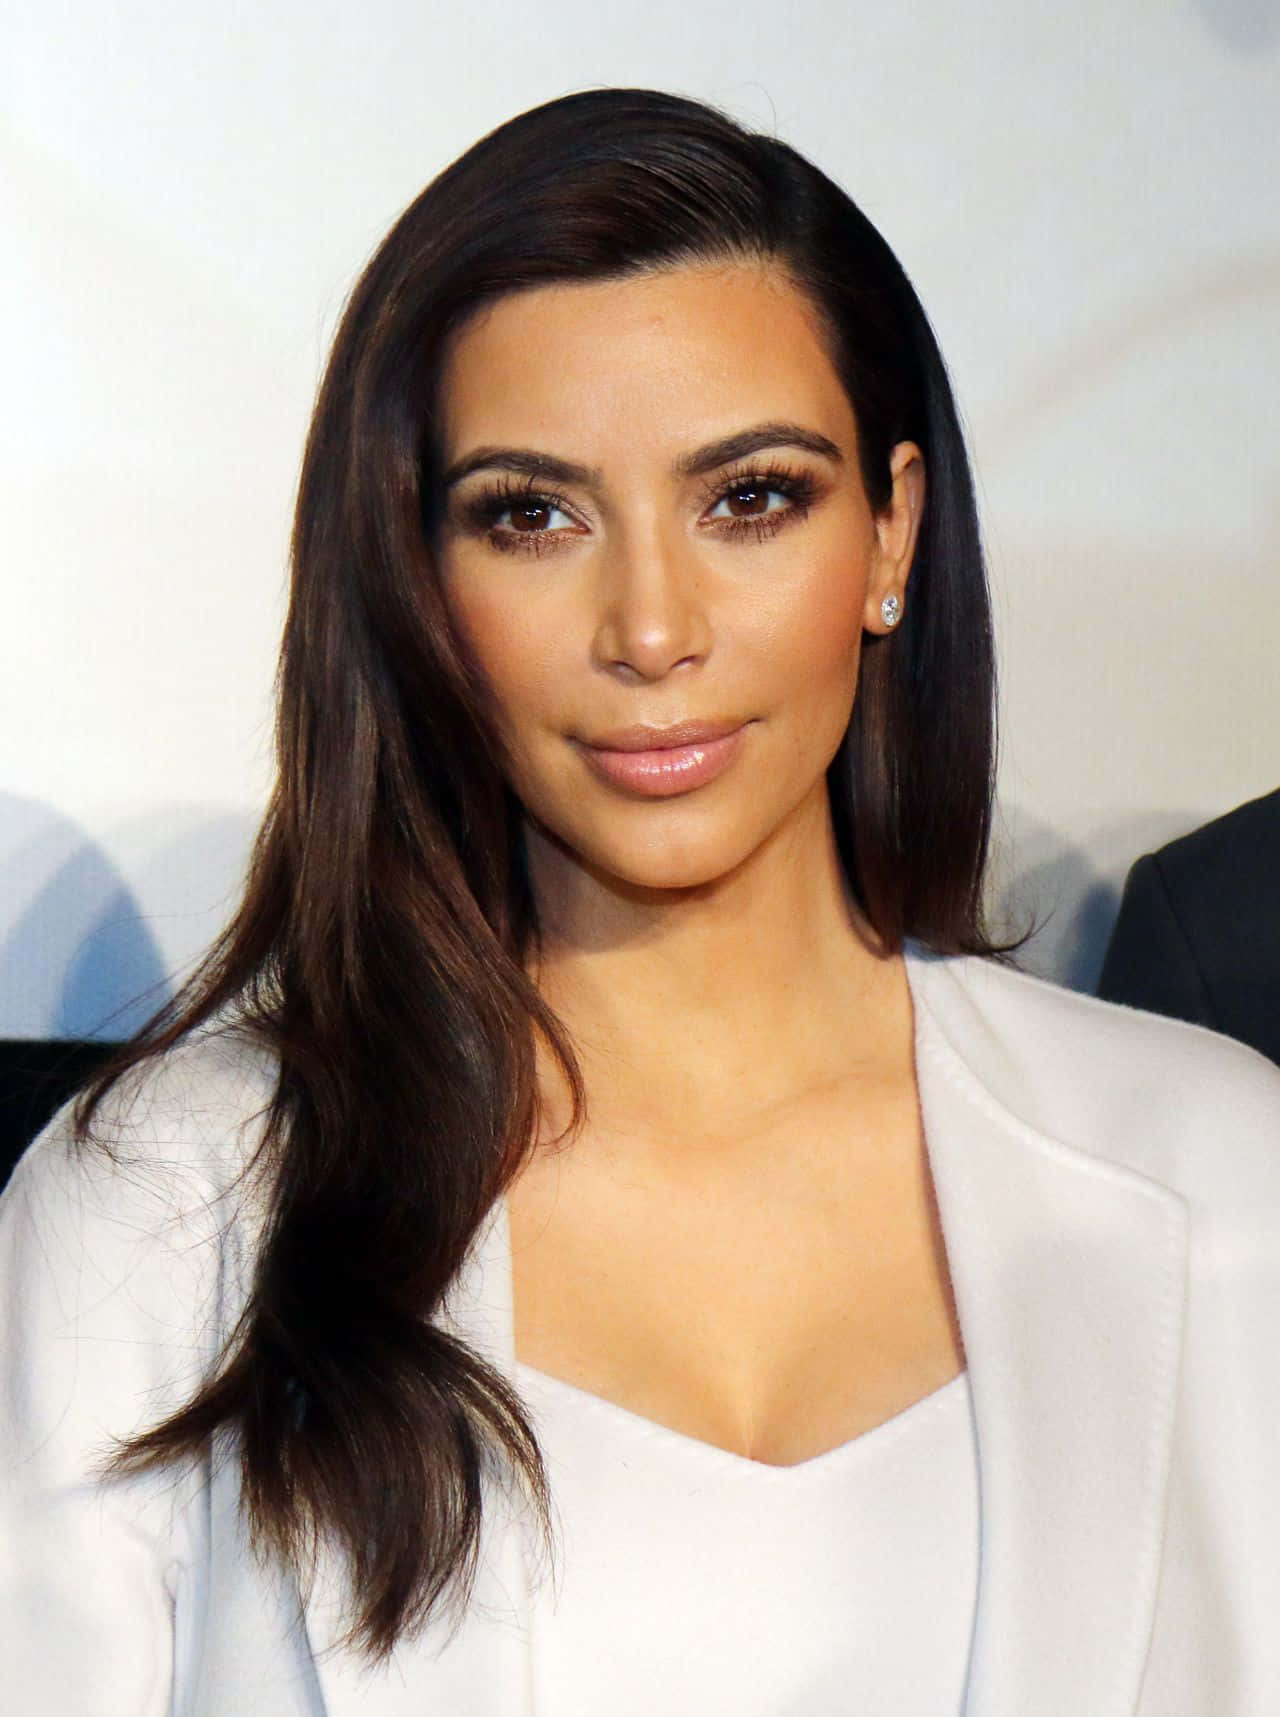 Kim Kardashian shows off her fierce style